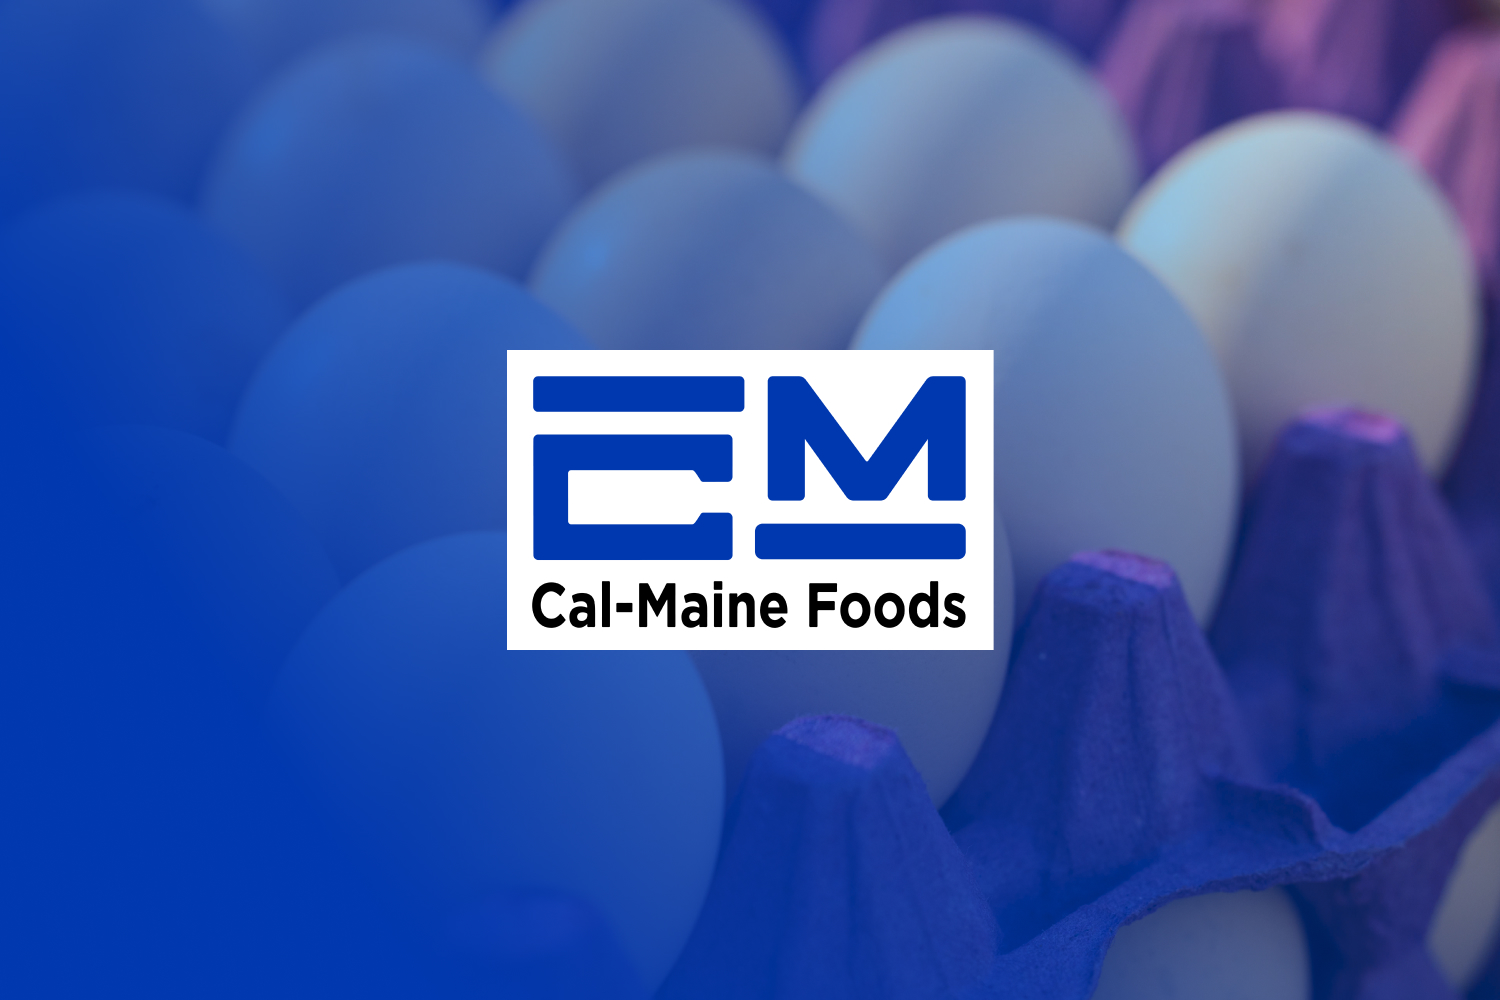 Cal-Maine Foods